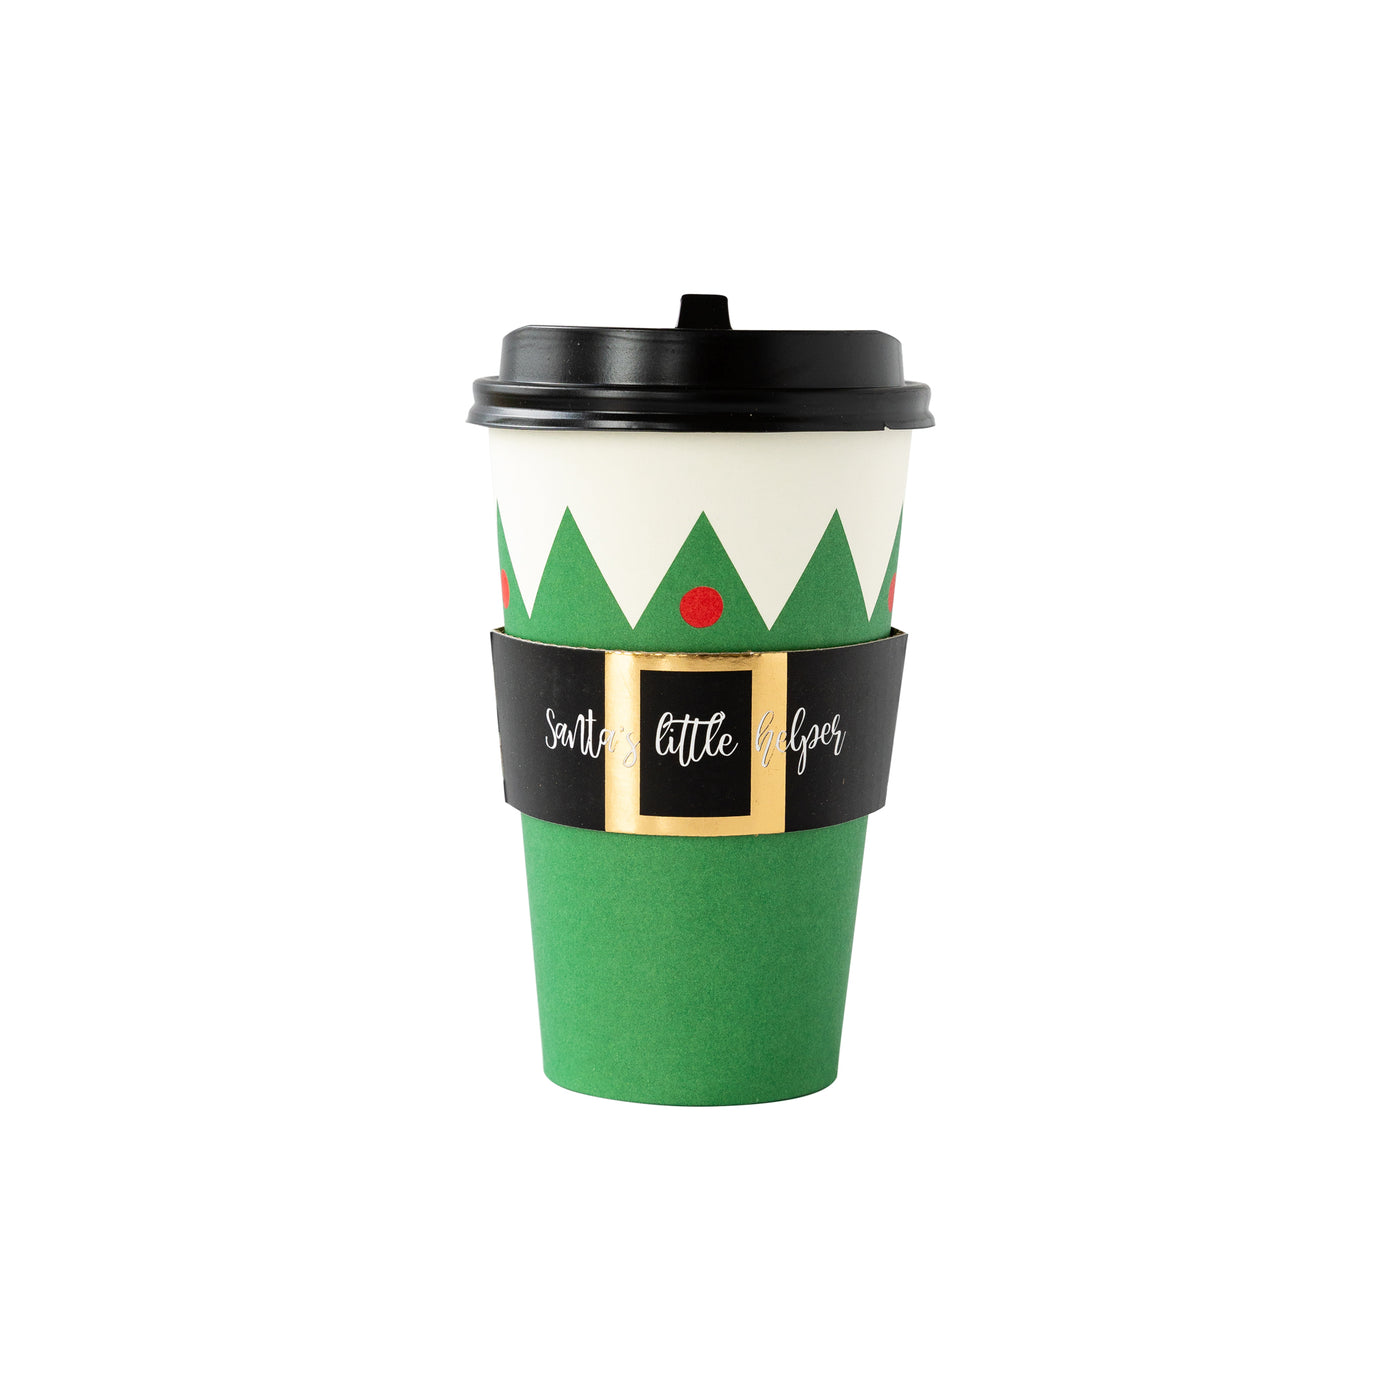 Santa's Helper Coffee To Go Cups